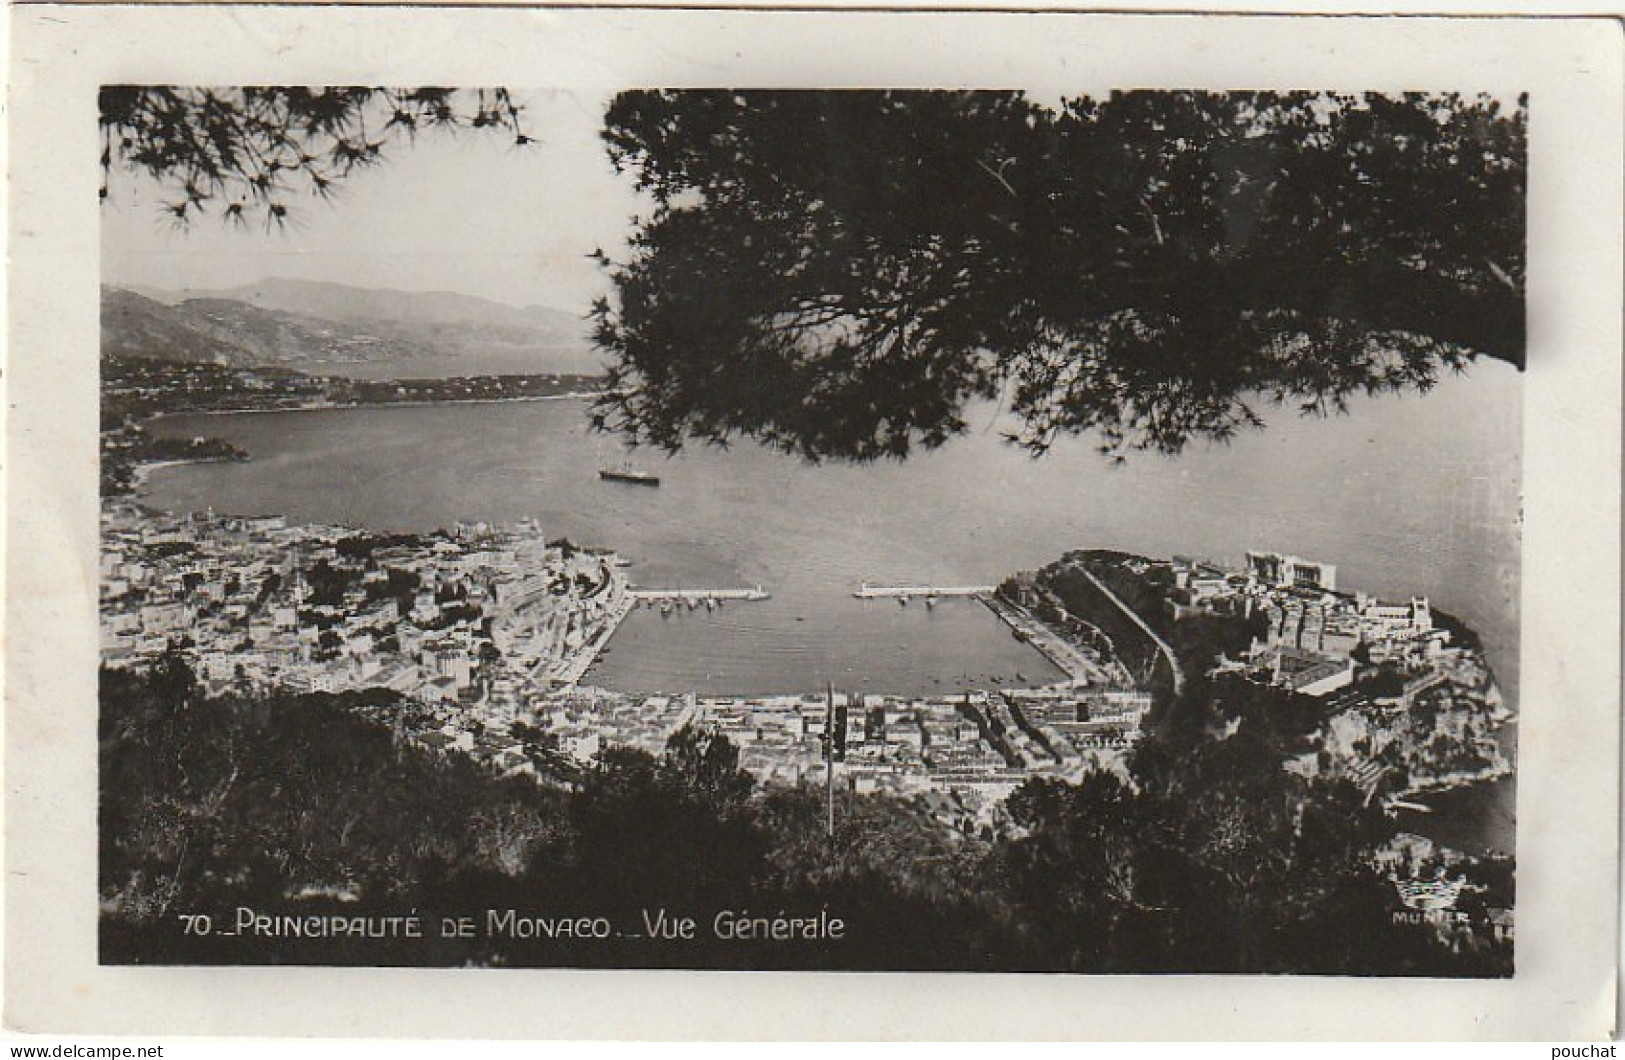 MO 15- PRINCIPAUTE DE MONACO - VUE GENERALE - 2 SCANS  - Viste Panoramiche, Panorama